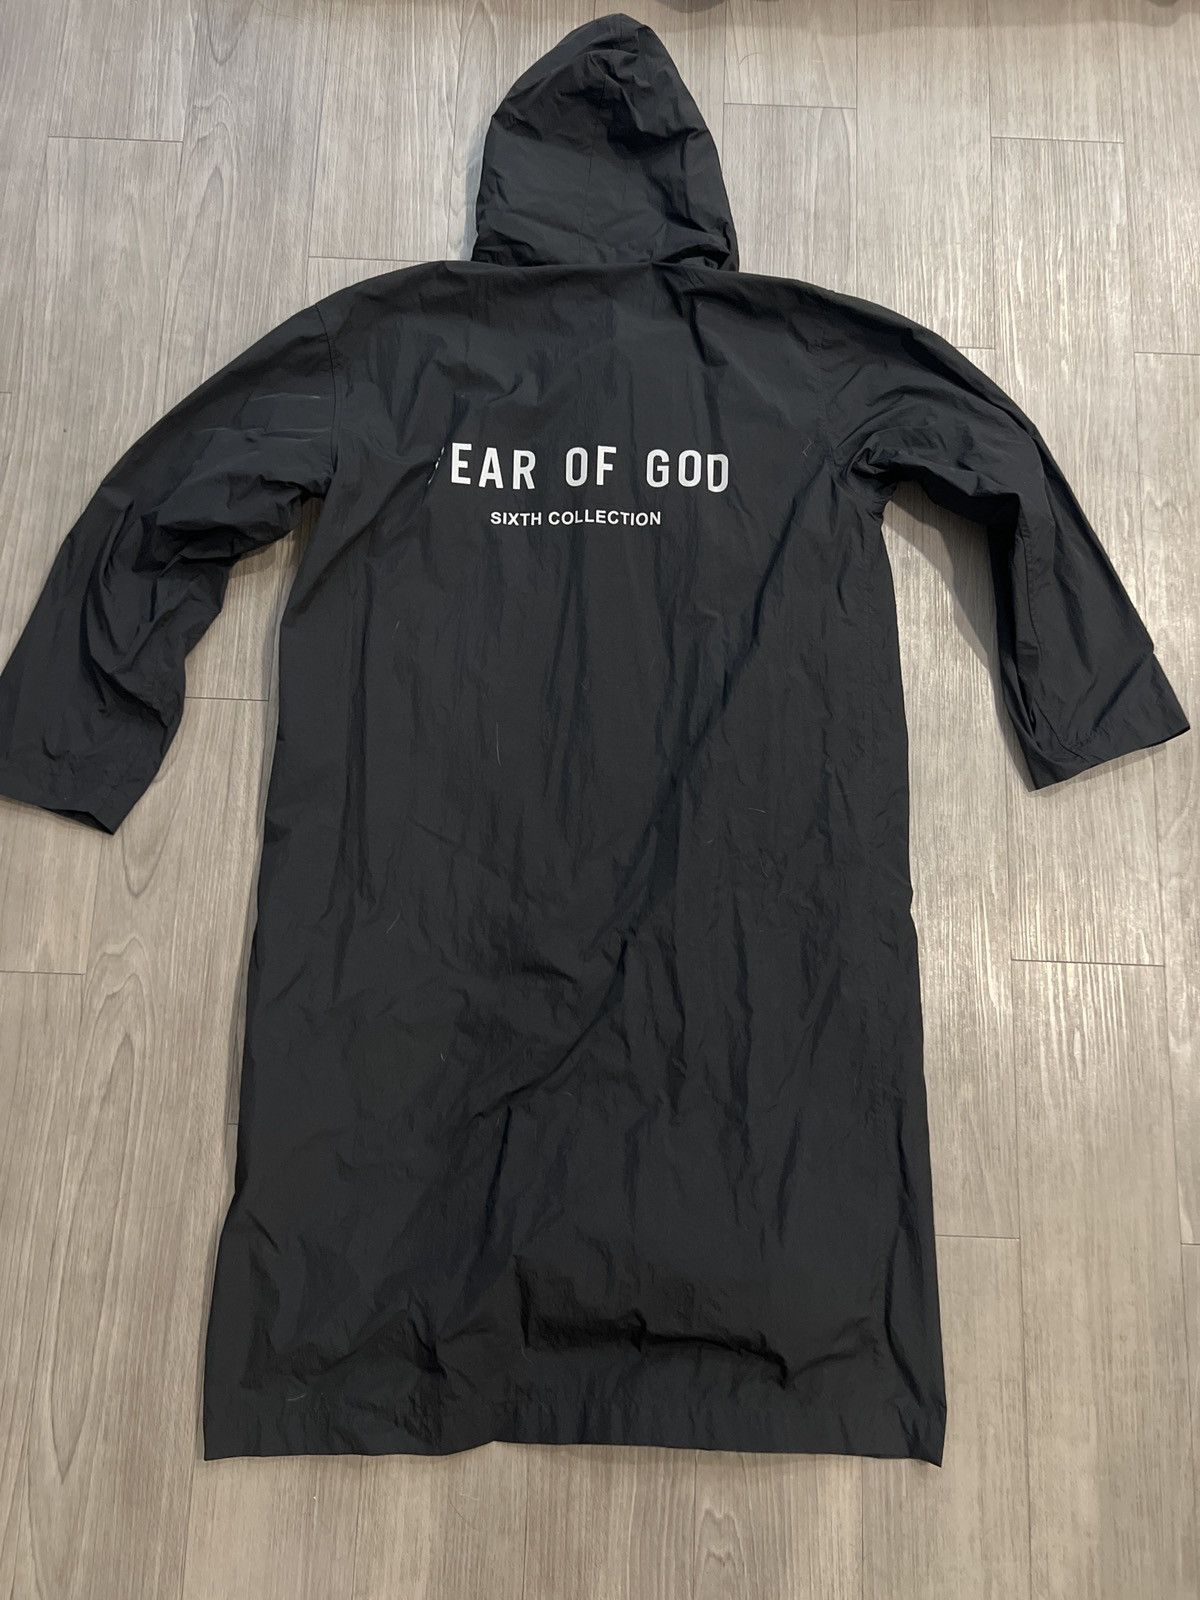 Fear of God Fear of God Sixth Collection long rain coat | Grailed